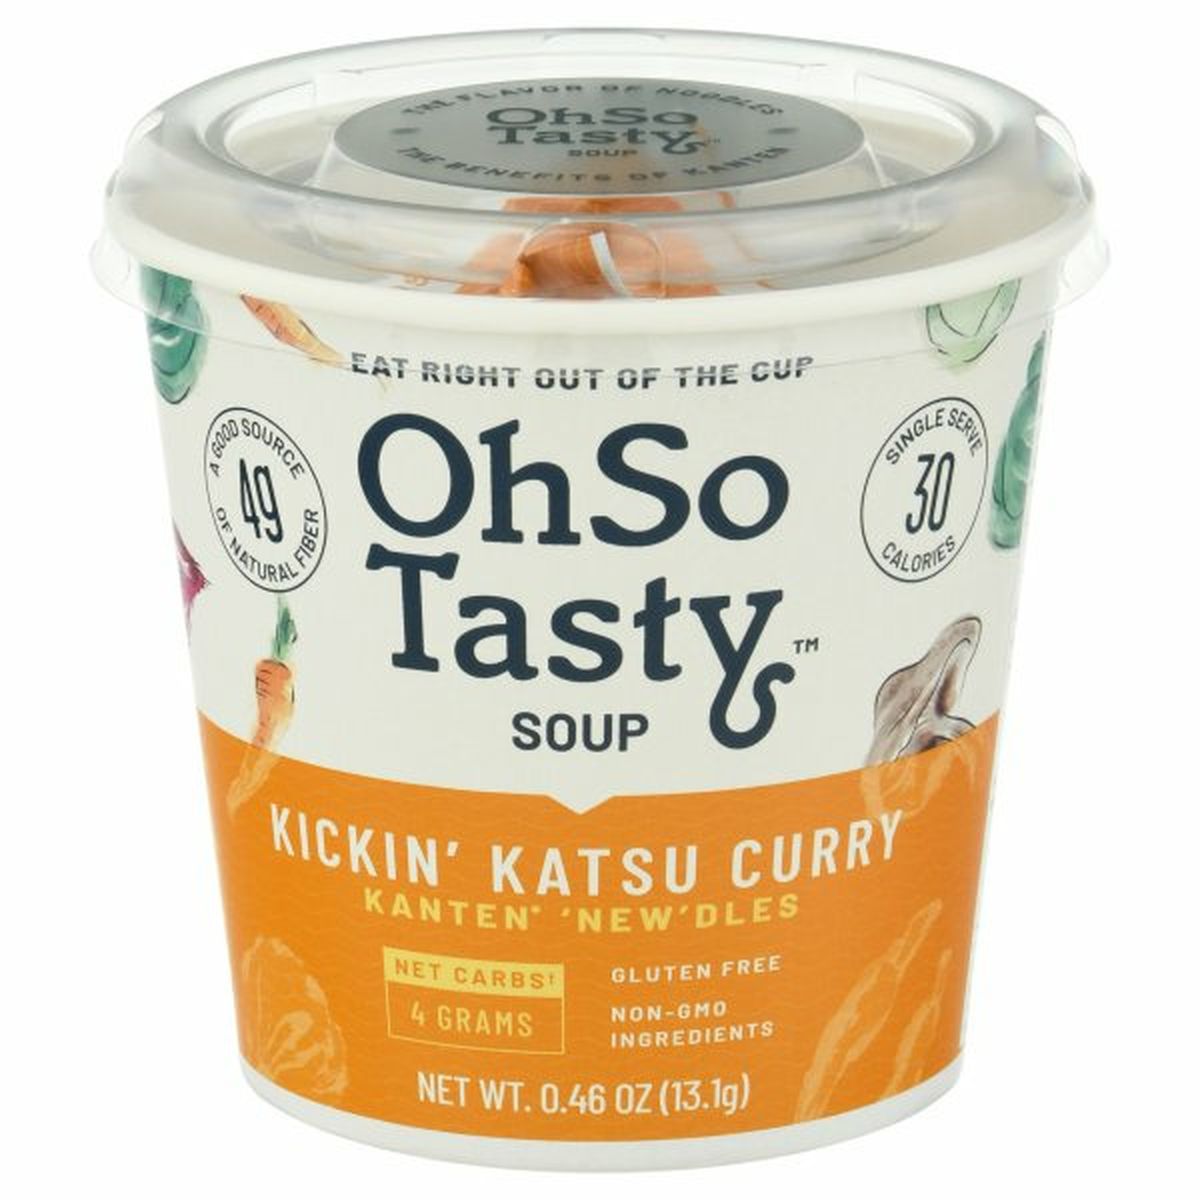 Calories in OhSo Tasty Soup, Kickin' Katsu Curry